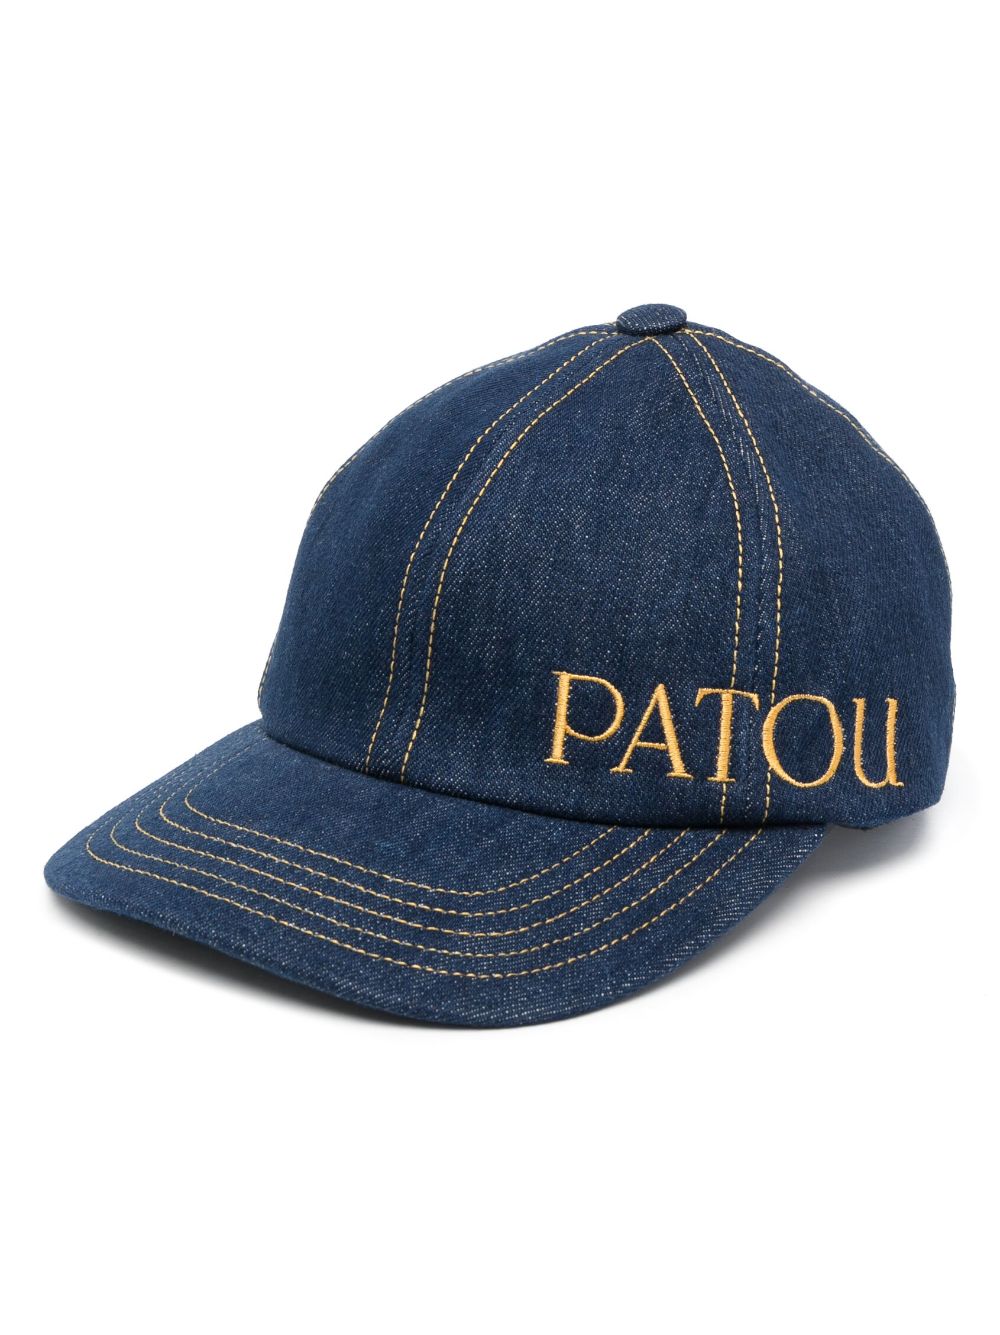 PATOU LOGO-EMBROIDERED DENIM CAP